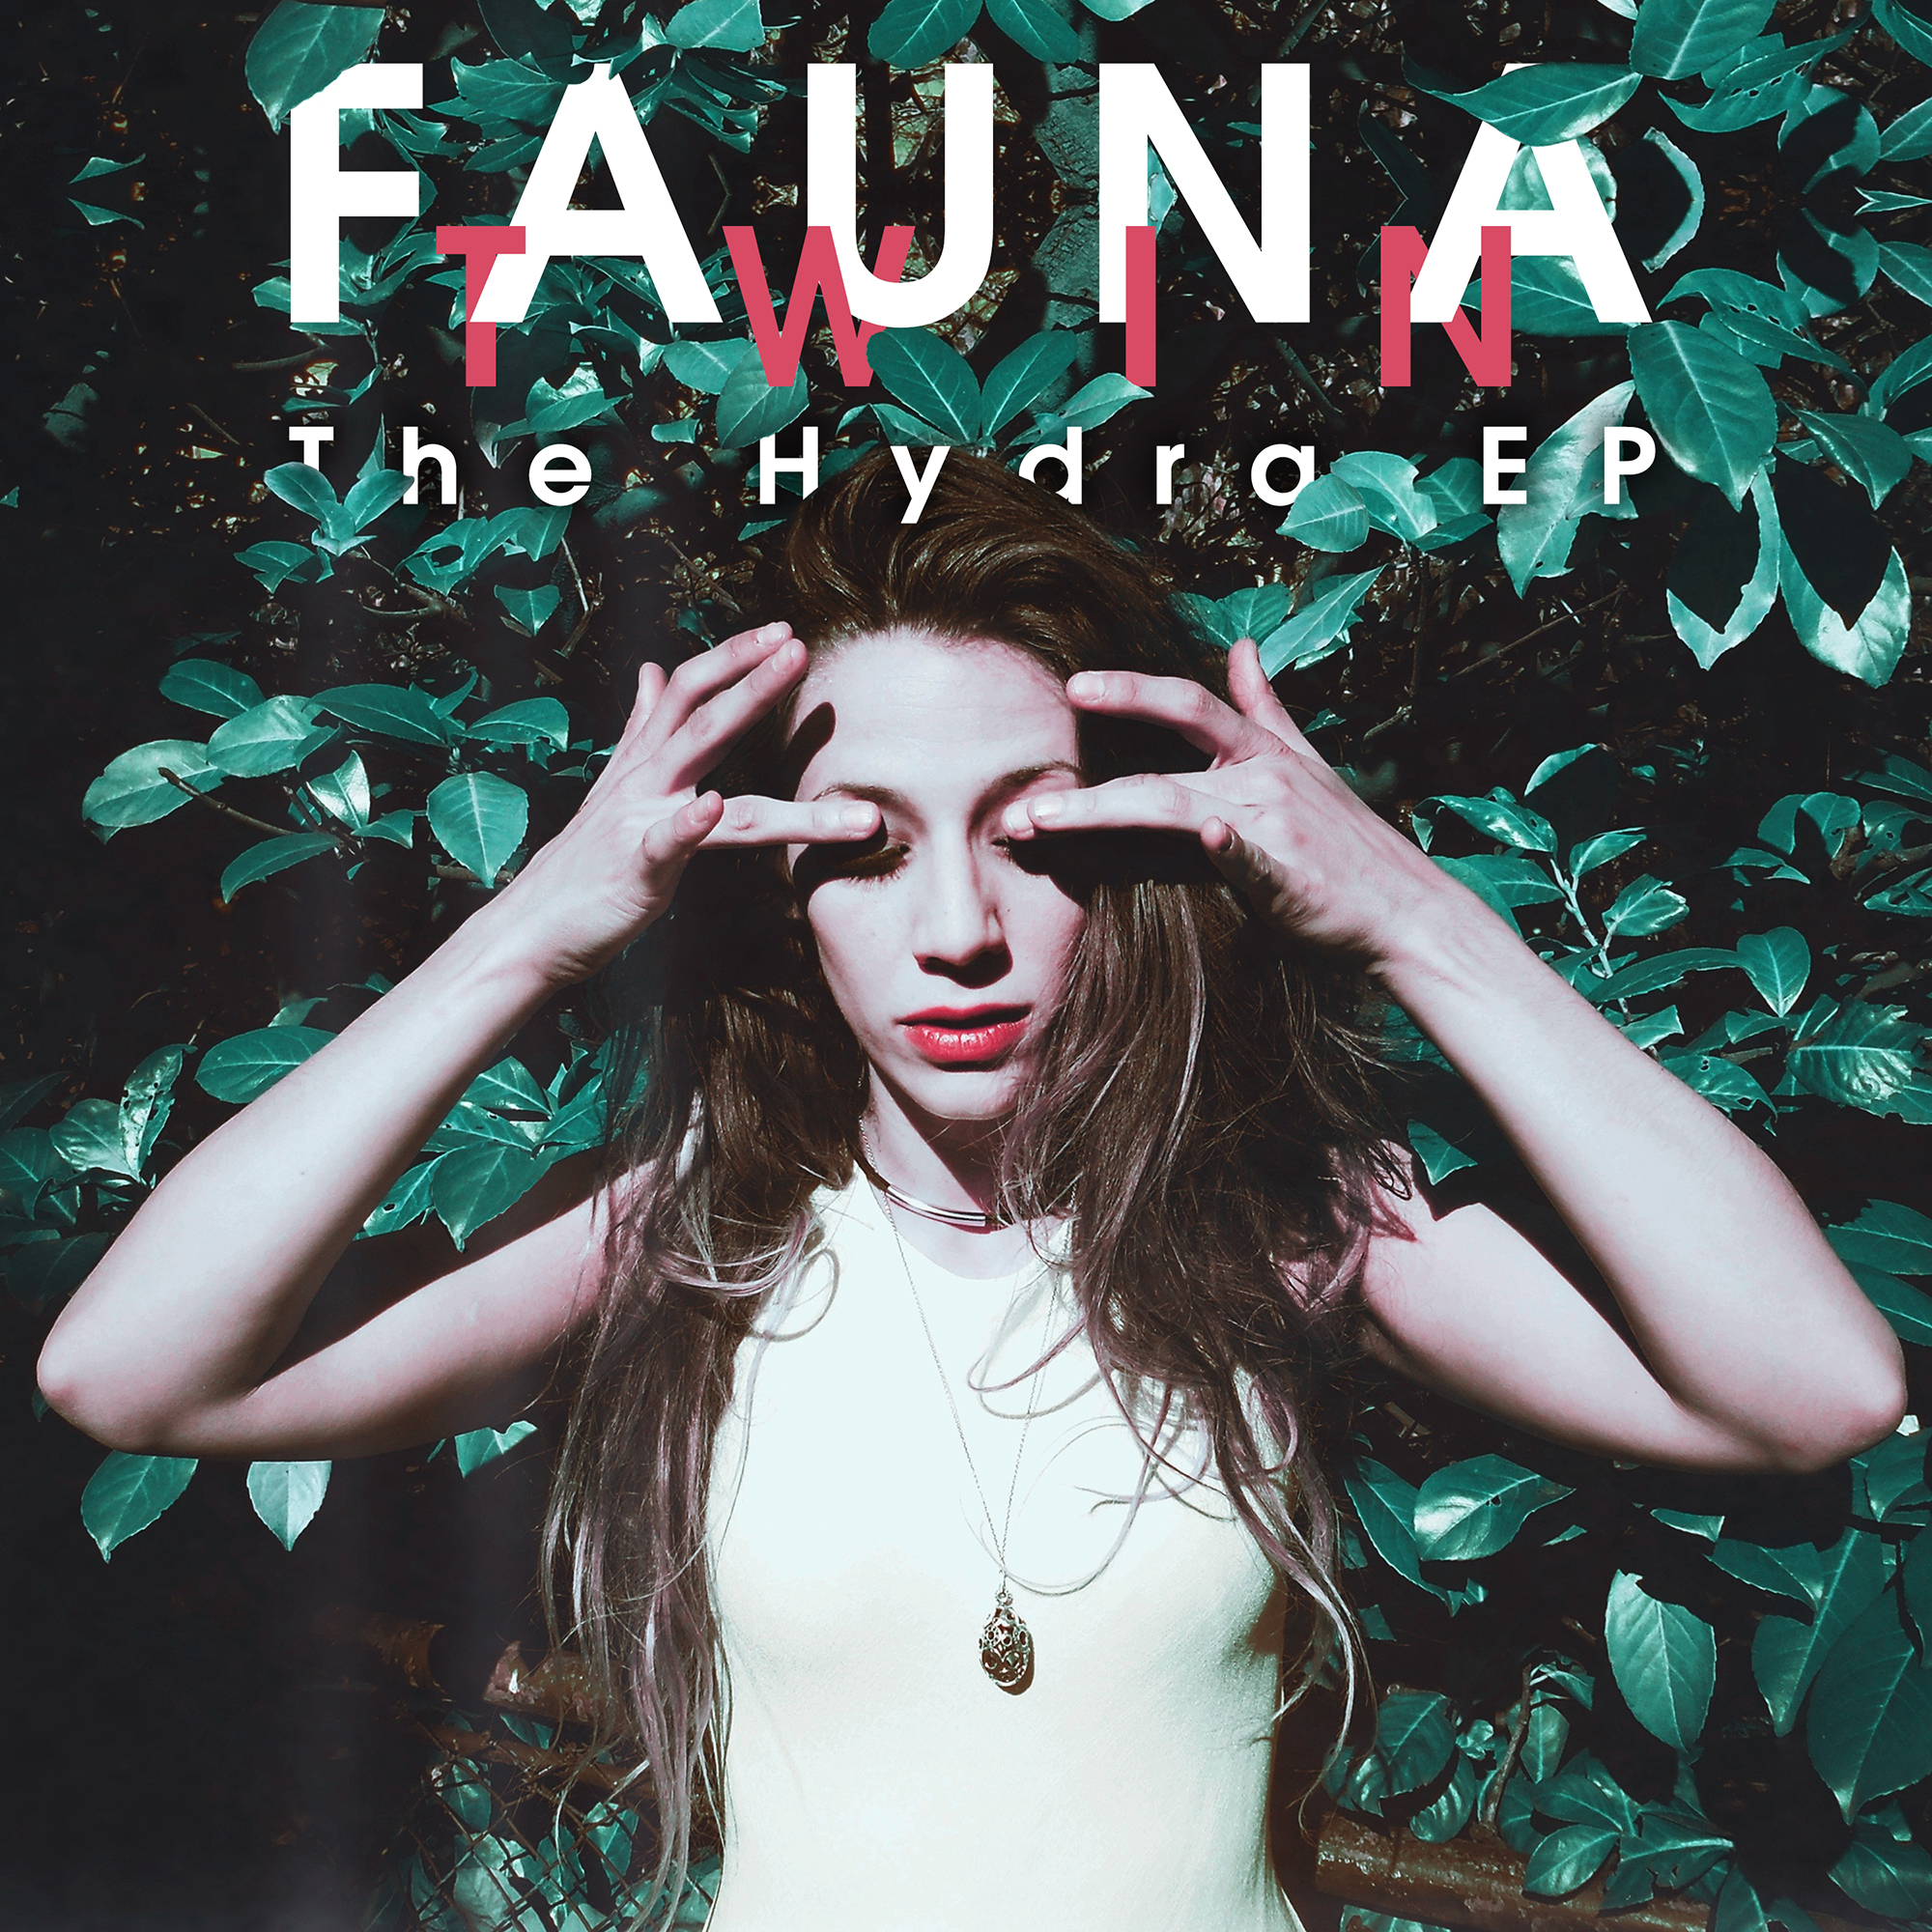 FAUNA TWIN - The Hydra Ep